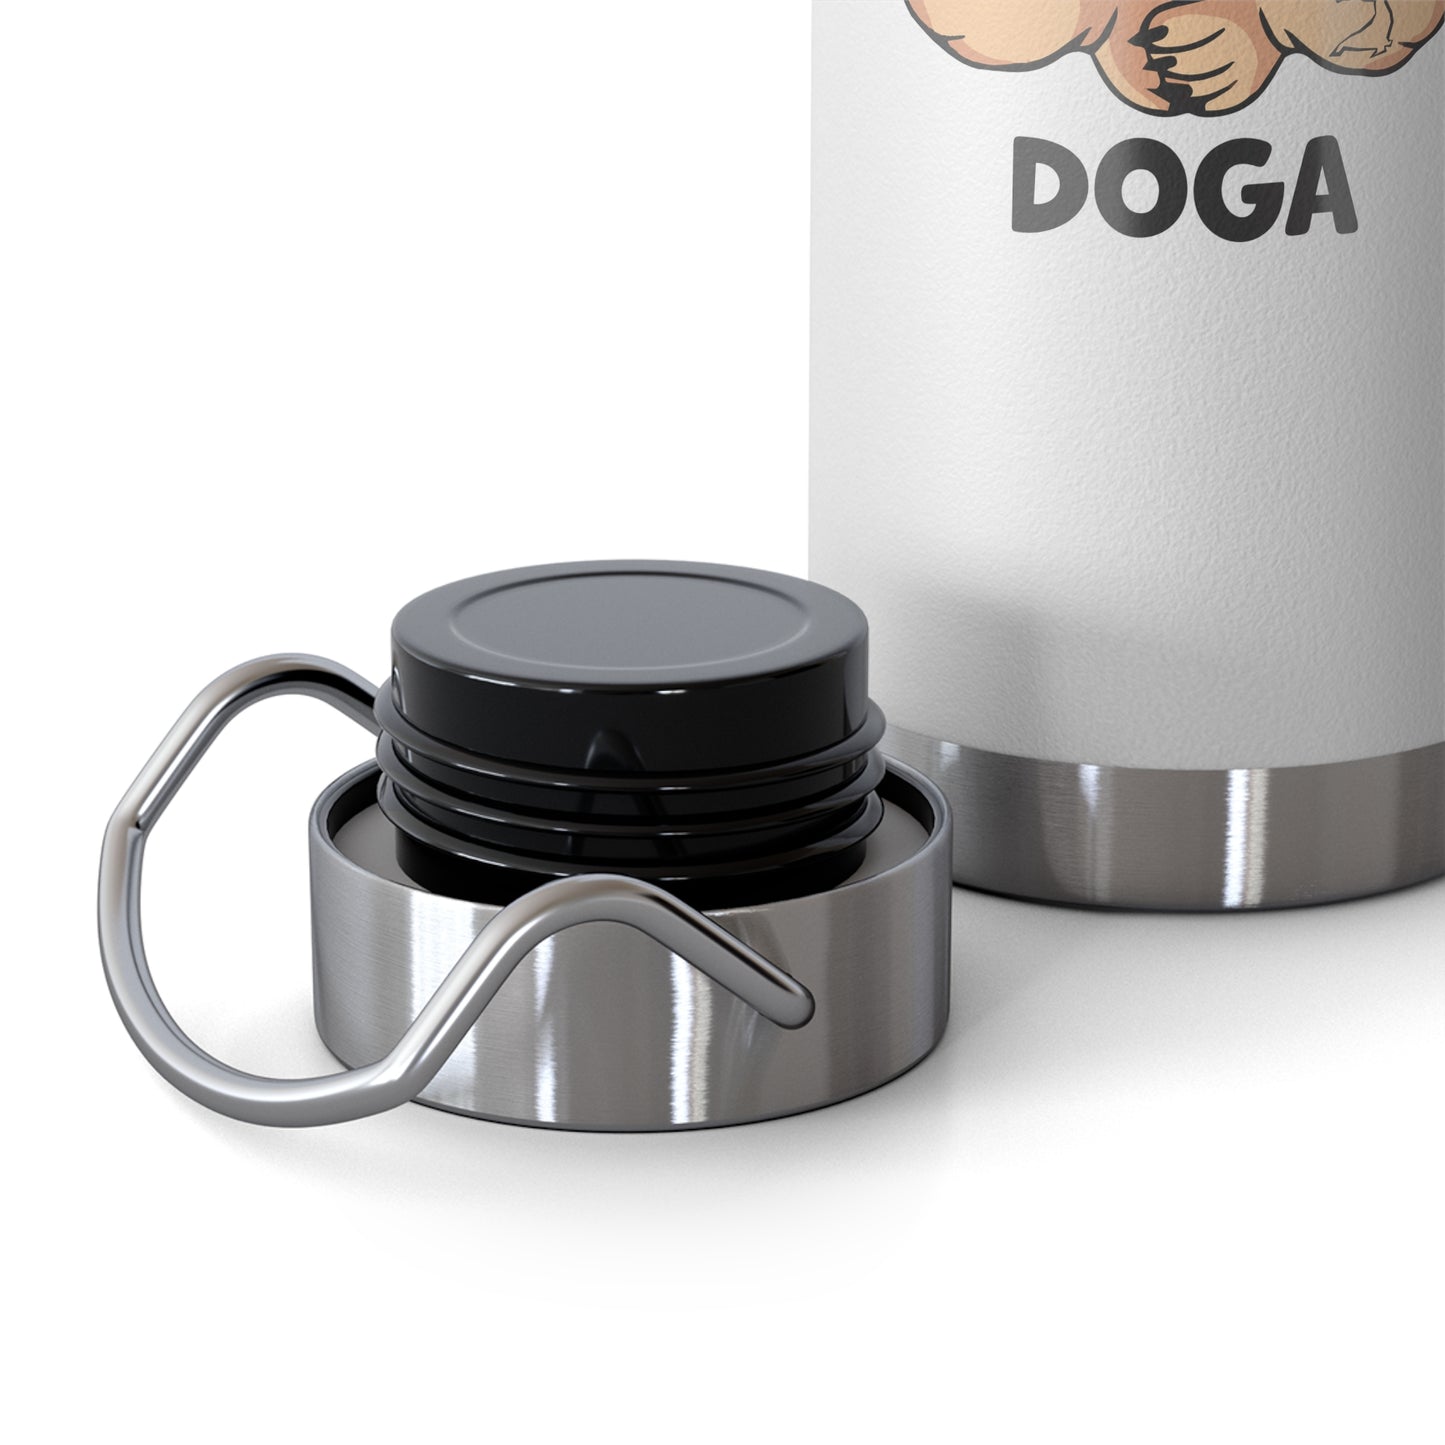 Doga Copper Vacuum Insulated Bottle, 22oz